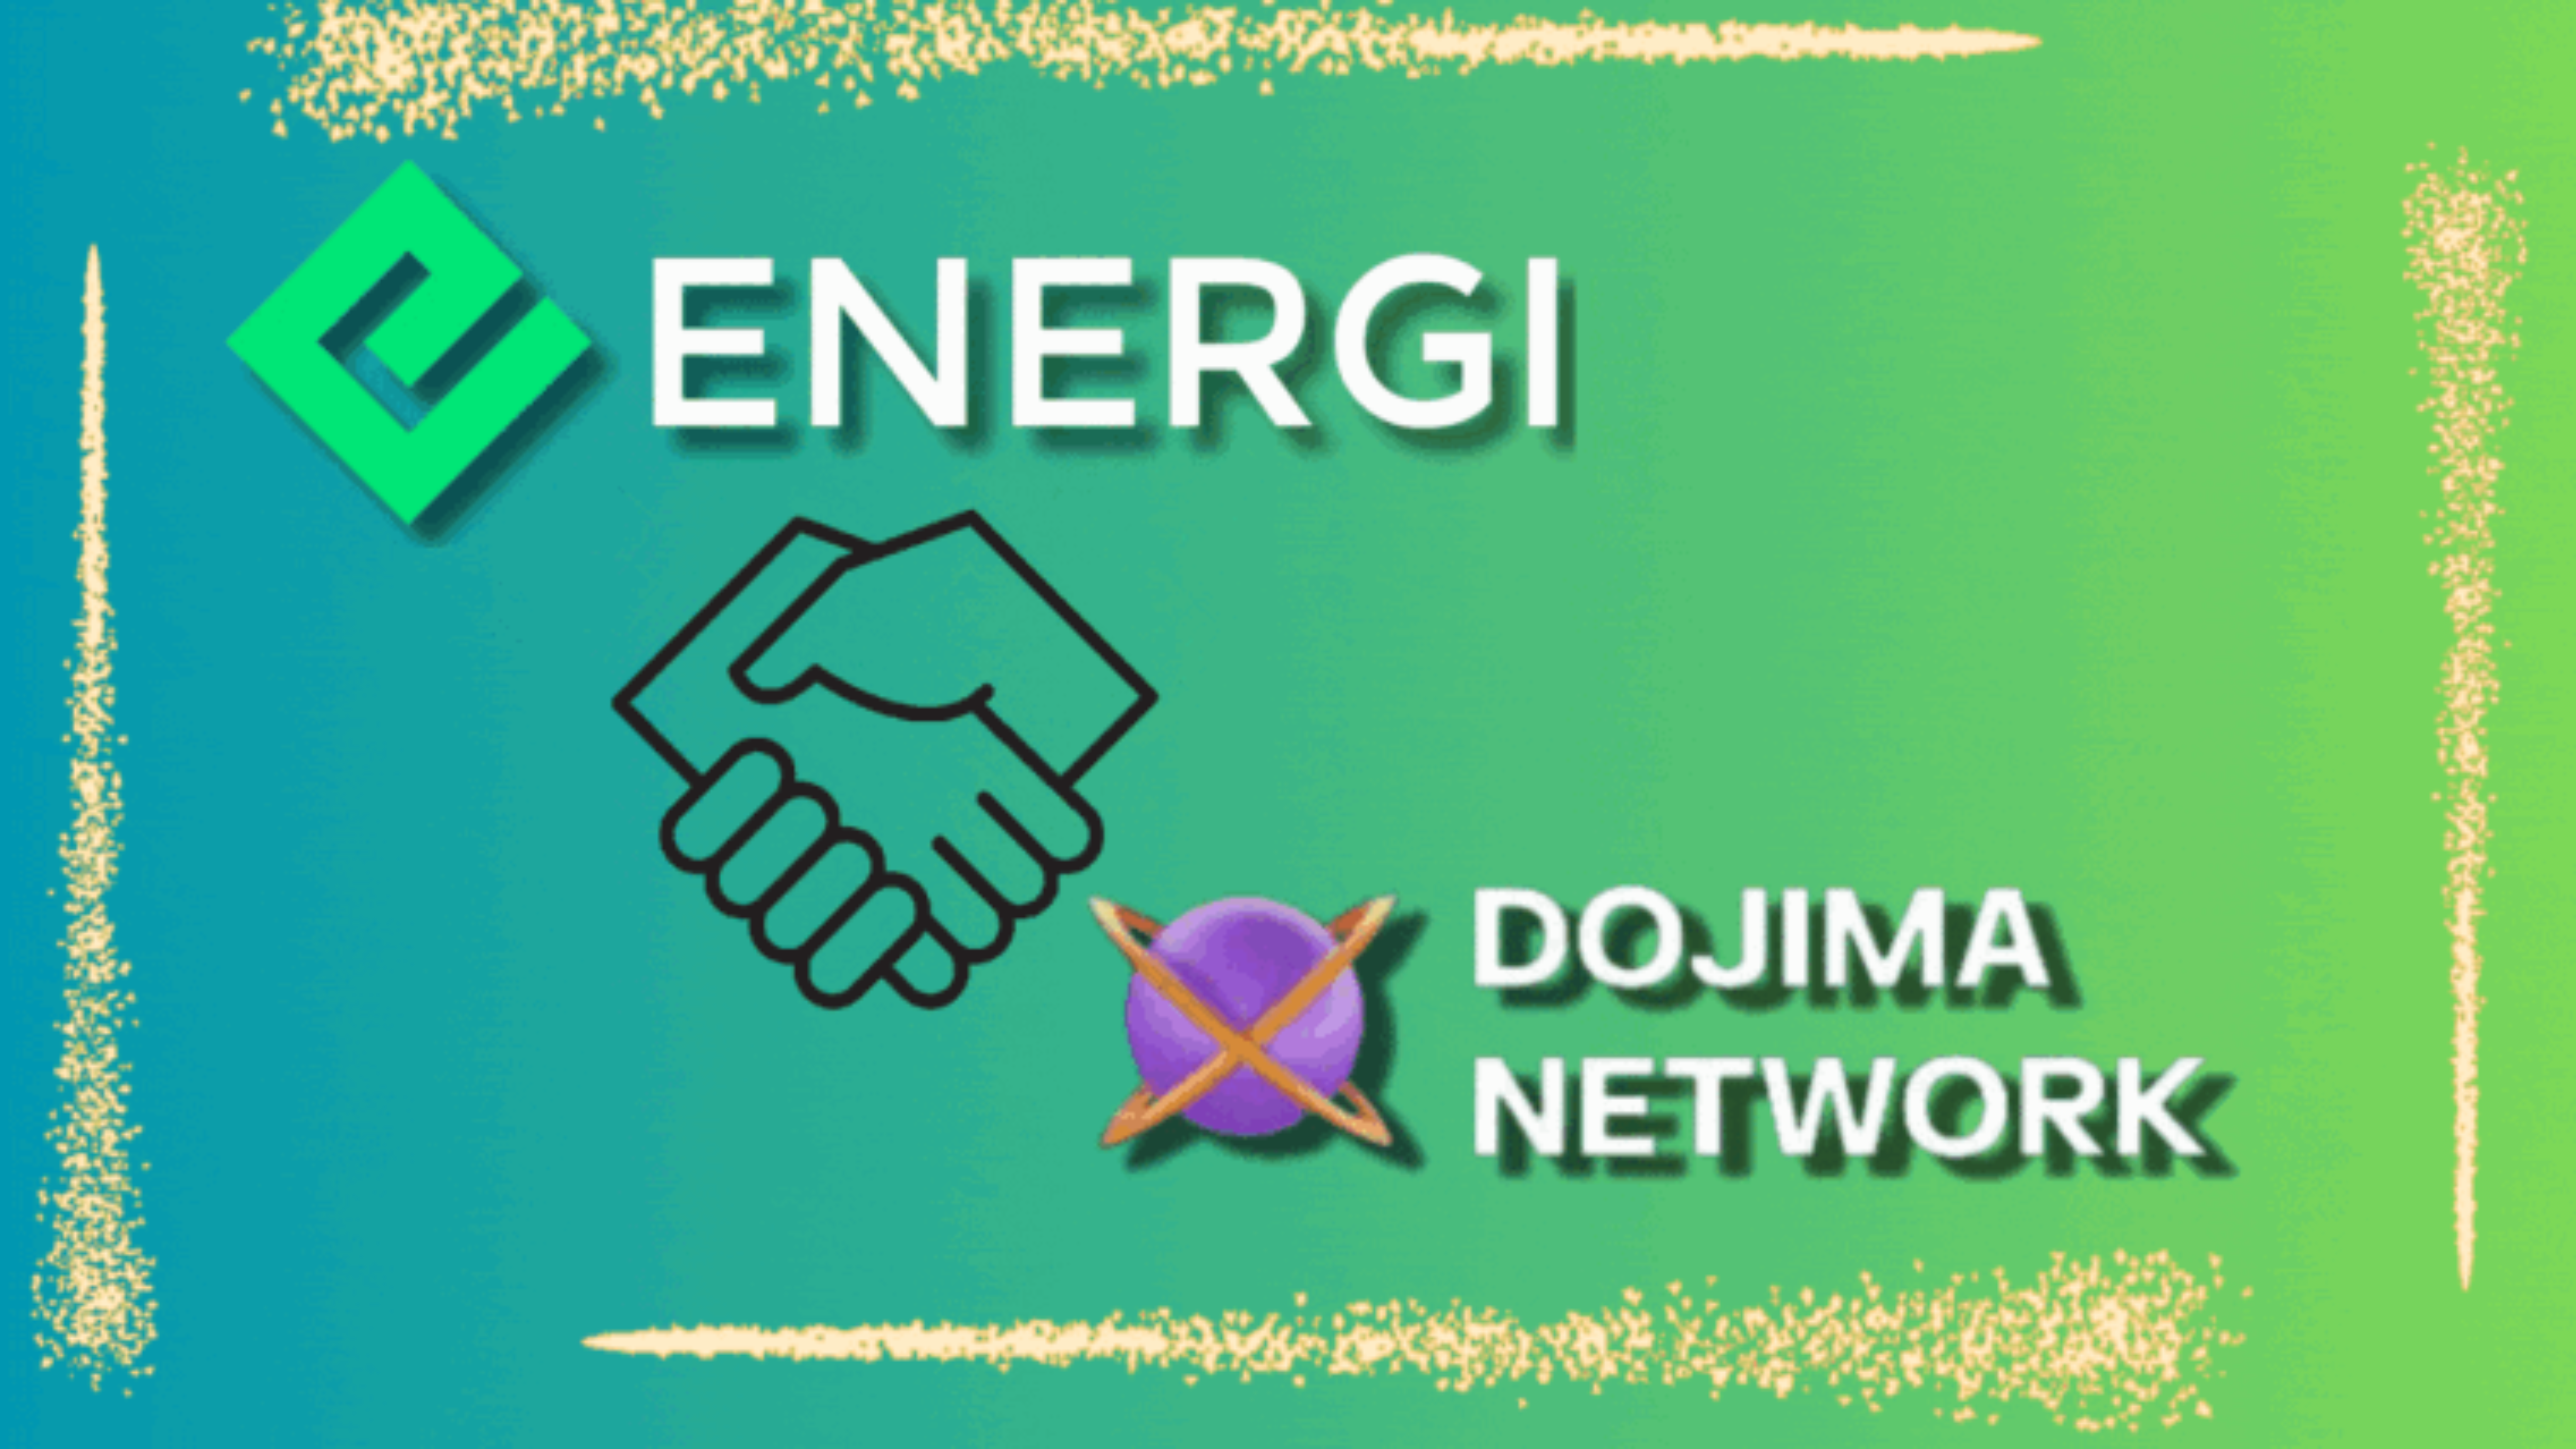 Energi Dojima Network Partnership